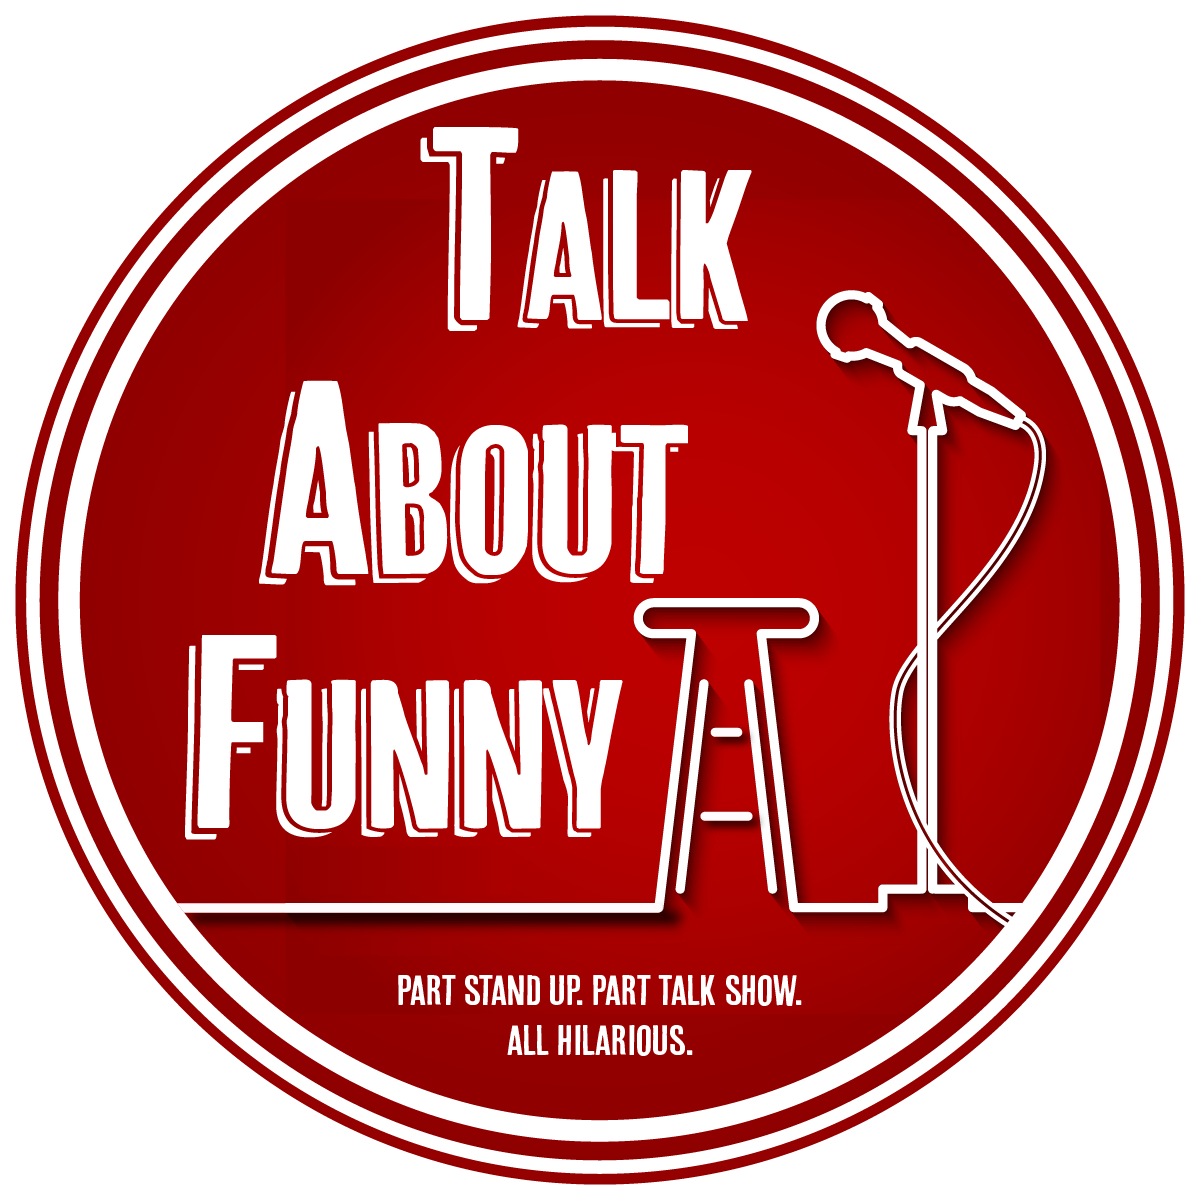 Talk About Funny Part Showcase Part Talk Show All Hilarious!